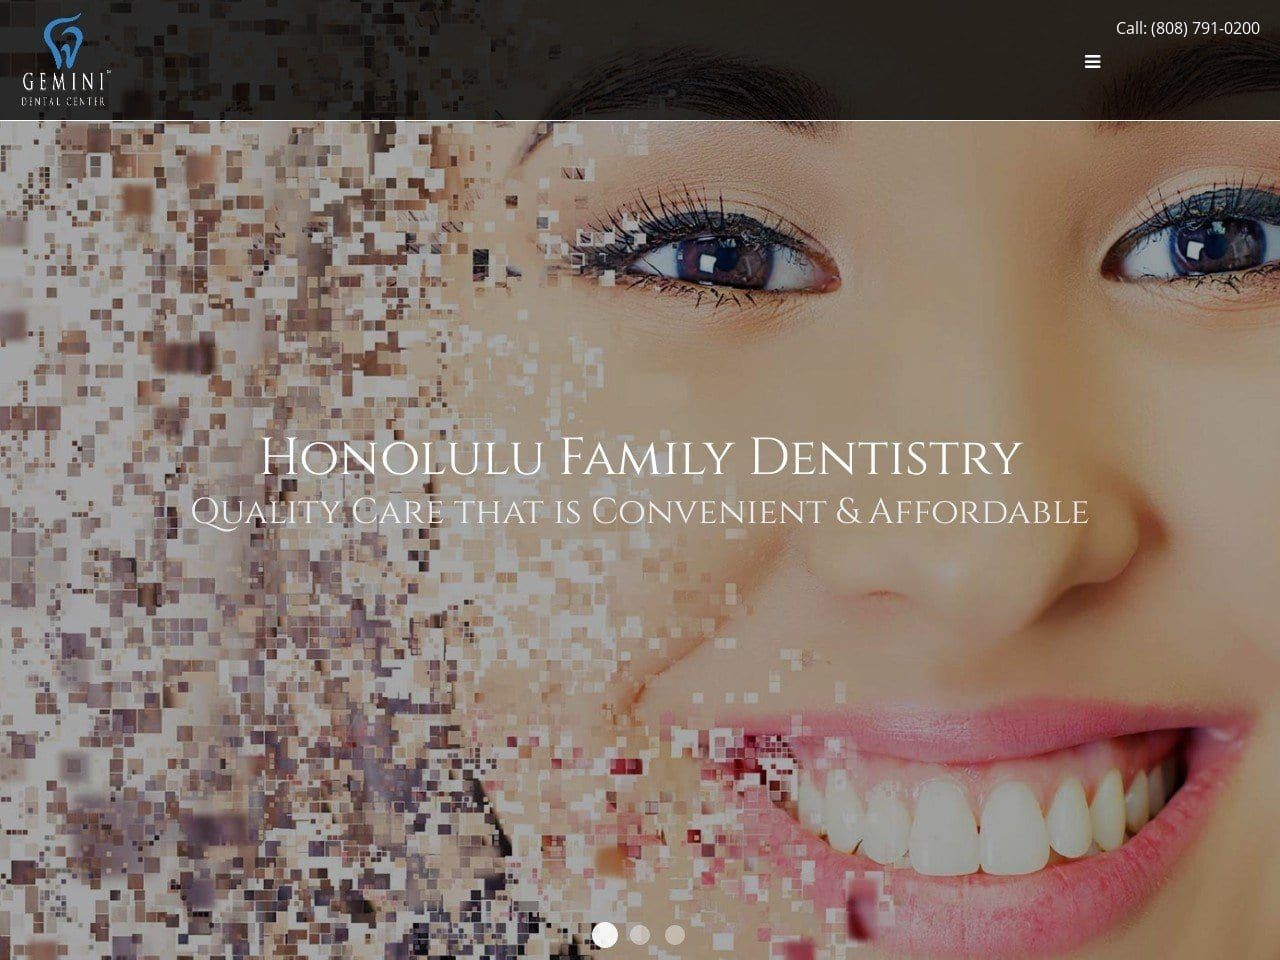 Gemini Dental Center Website Screenshot from geminidentalcenter.com